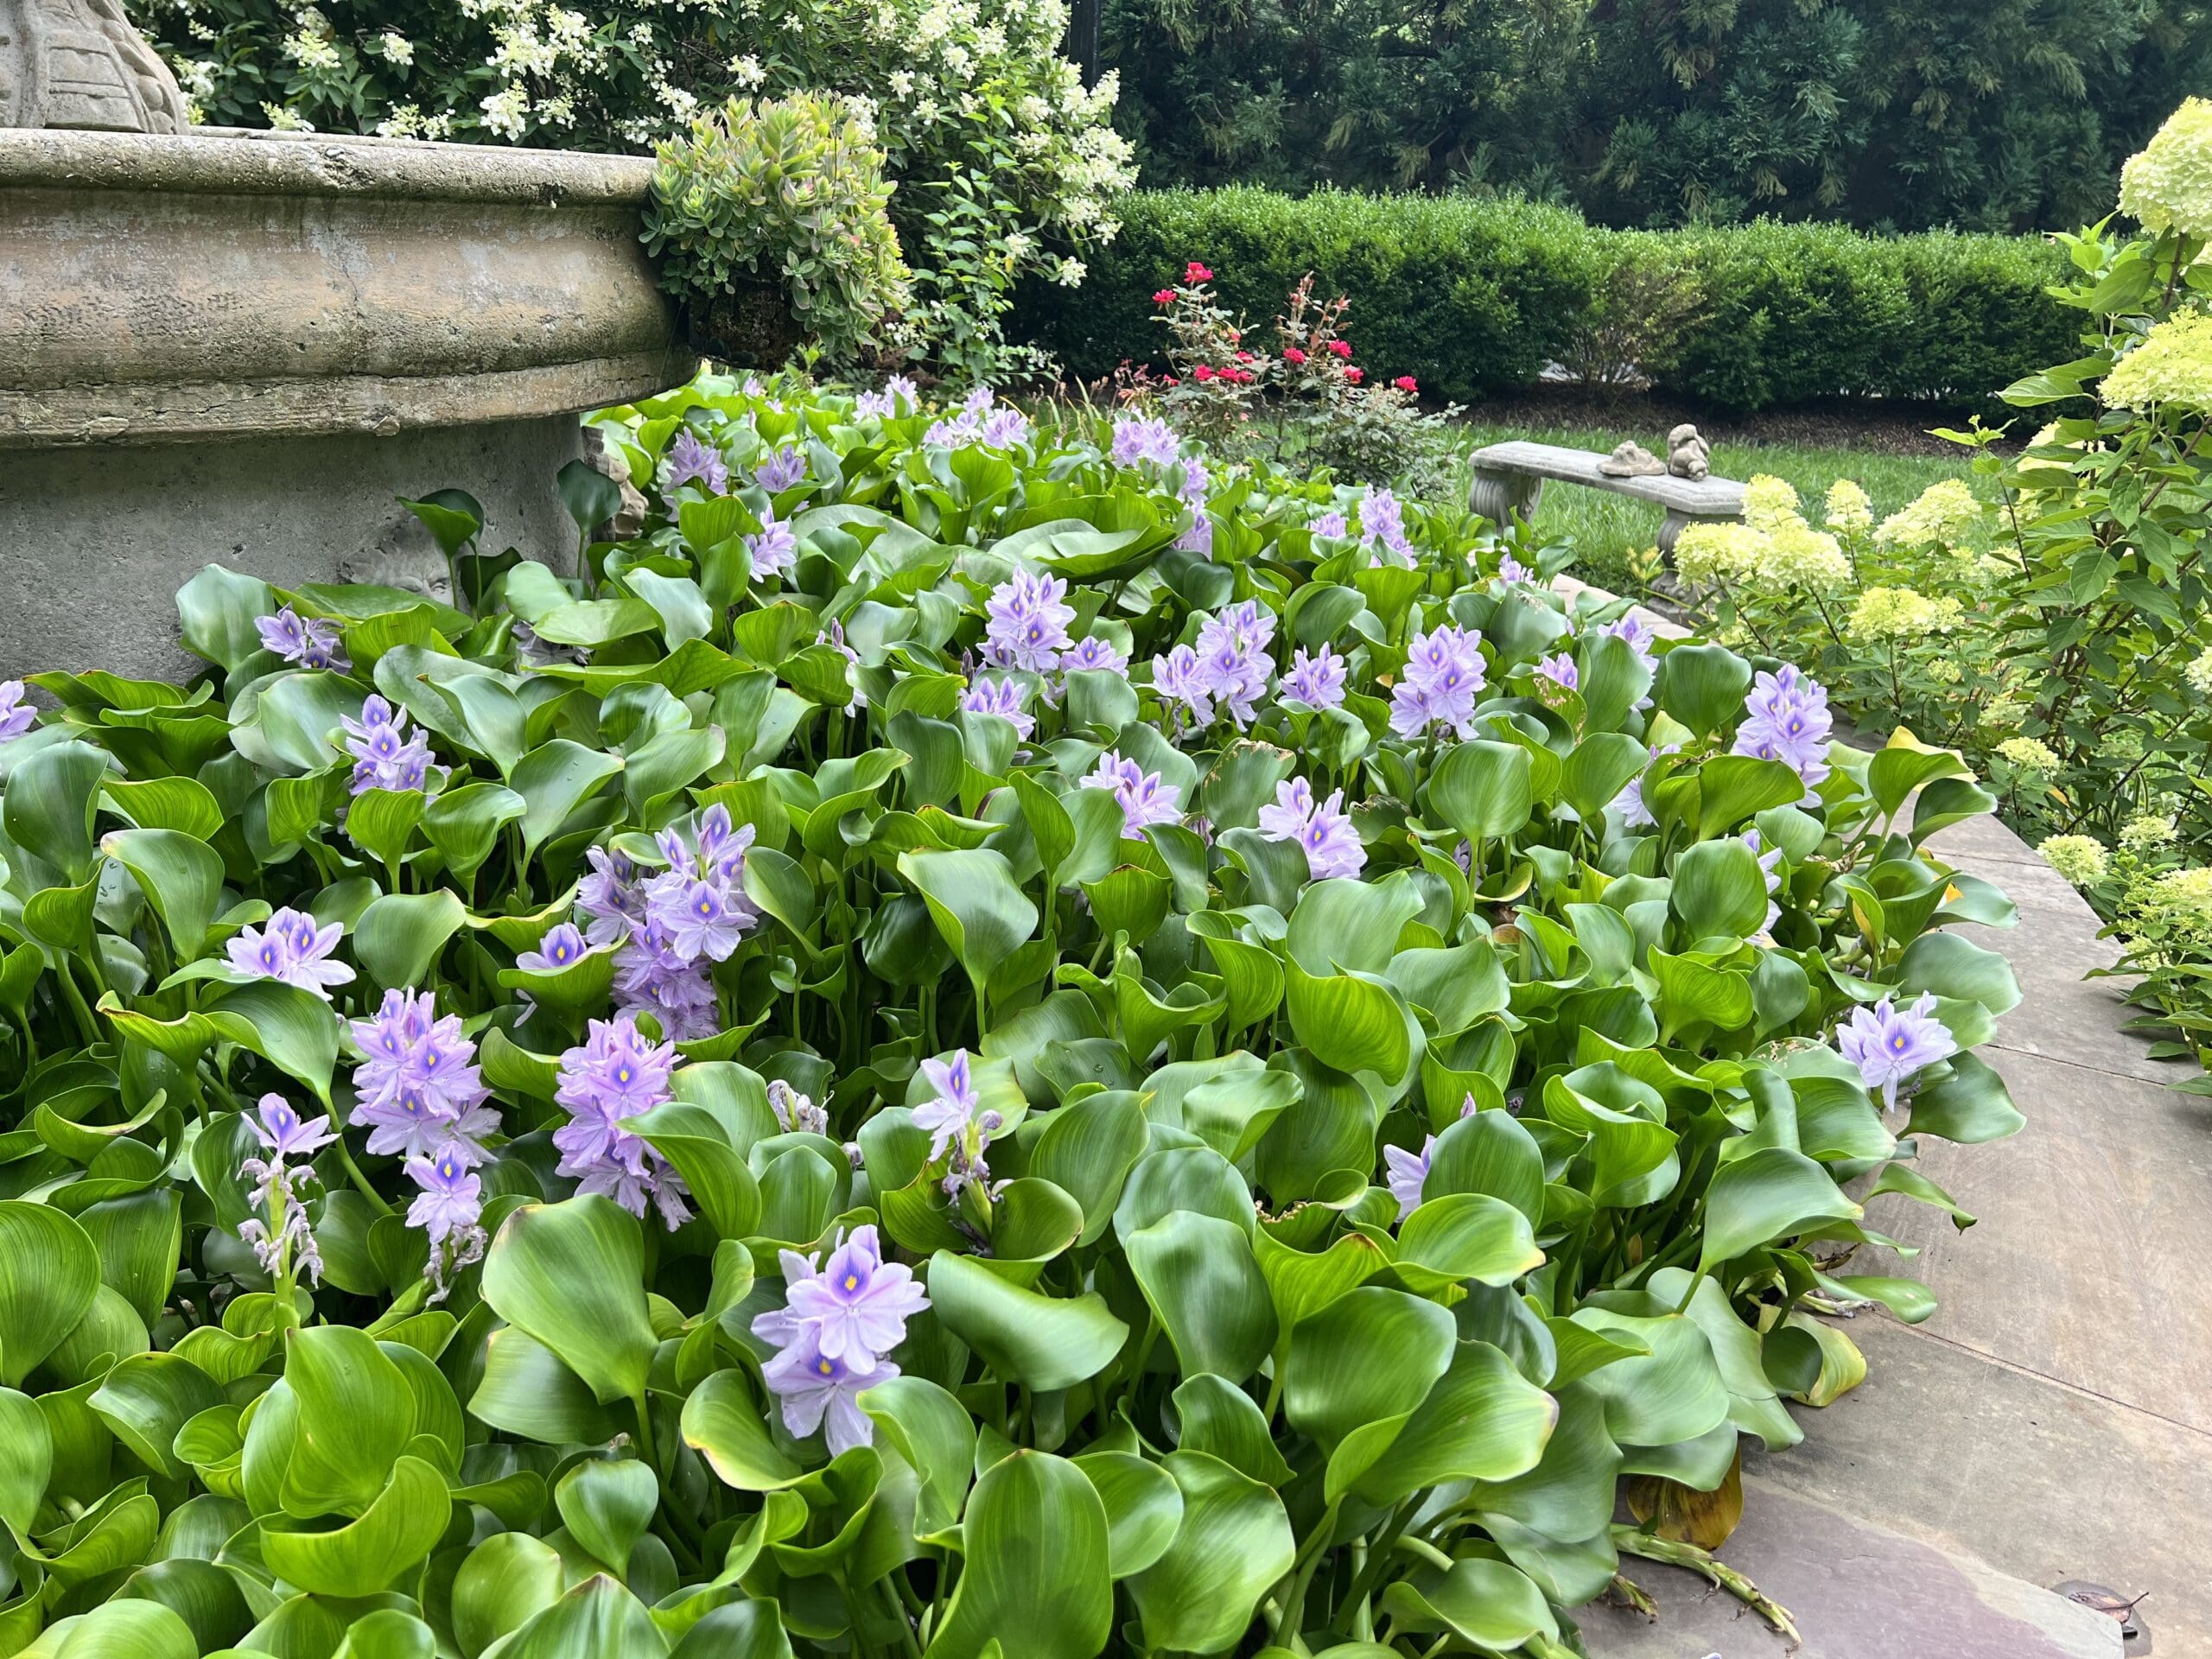 Flowering water hyacinths and water lilies